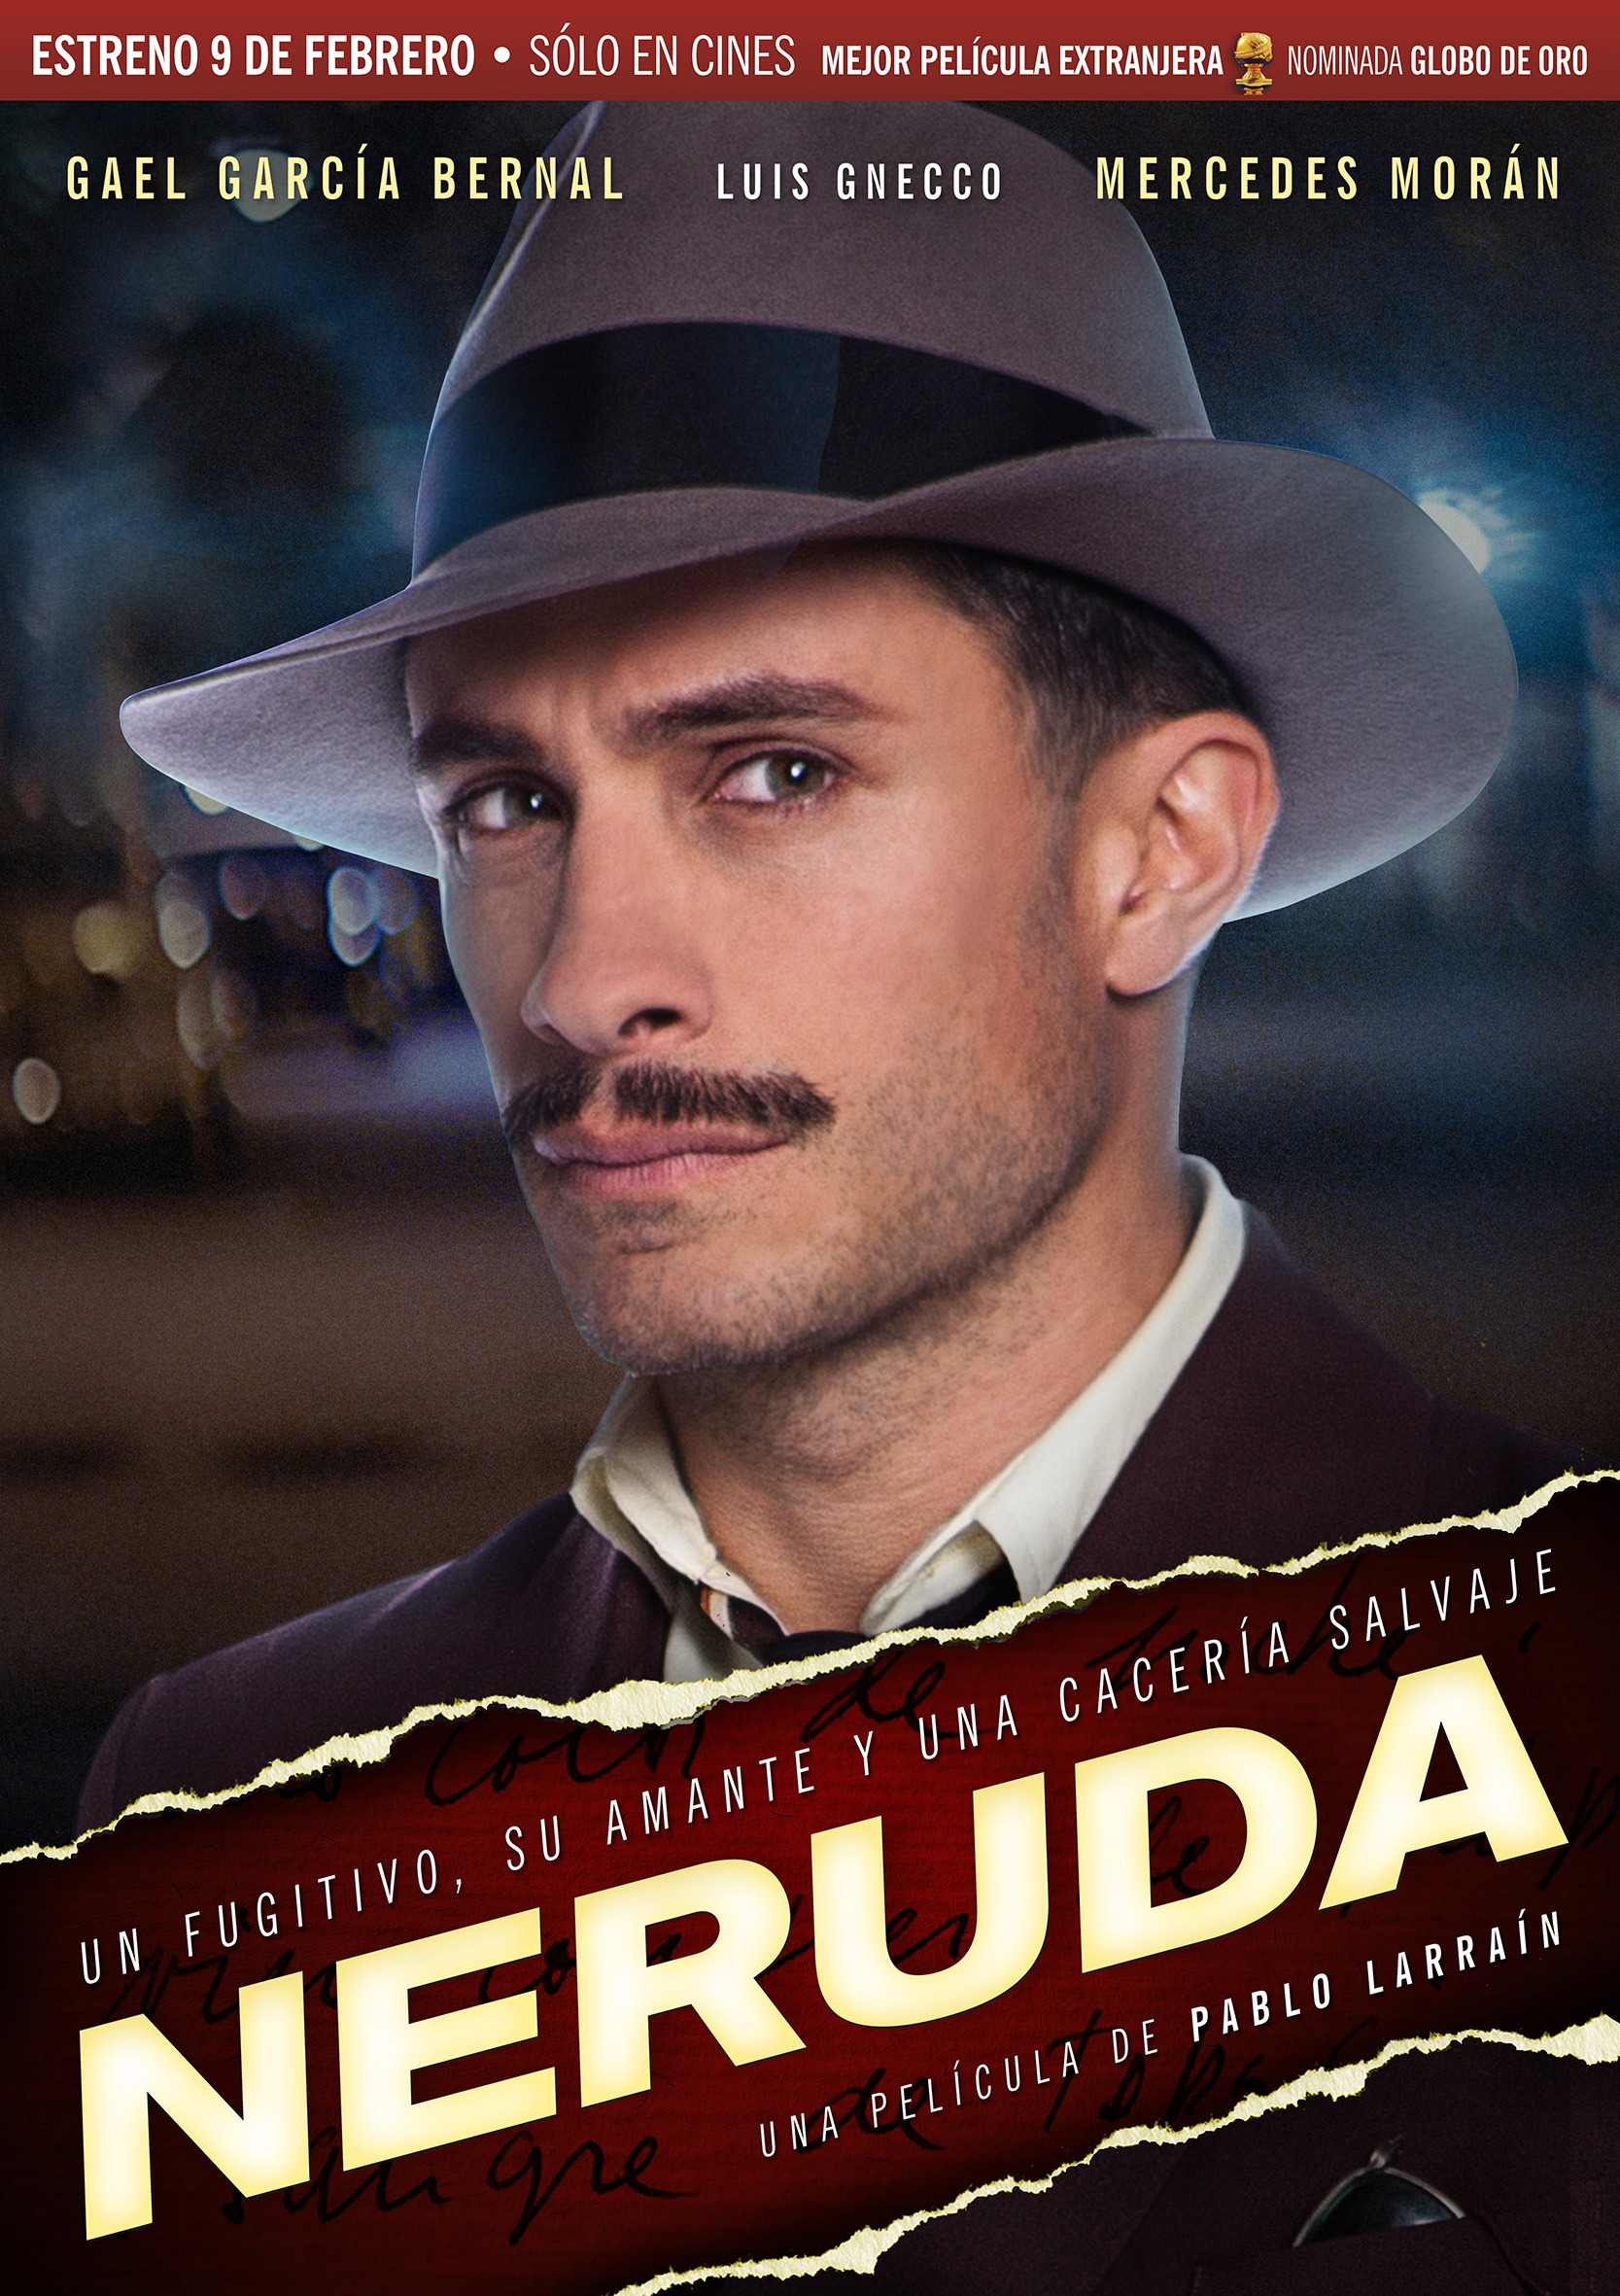 Mega Sized Movie Poster Image for Neruda (#8 of 9)